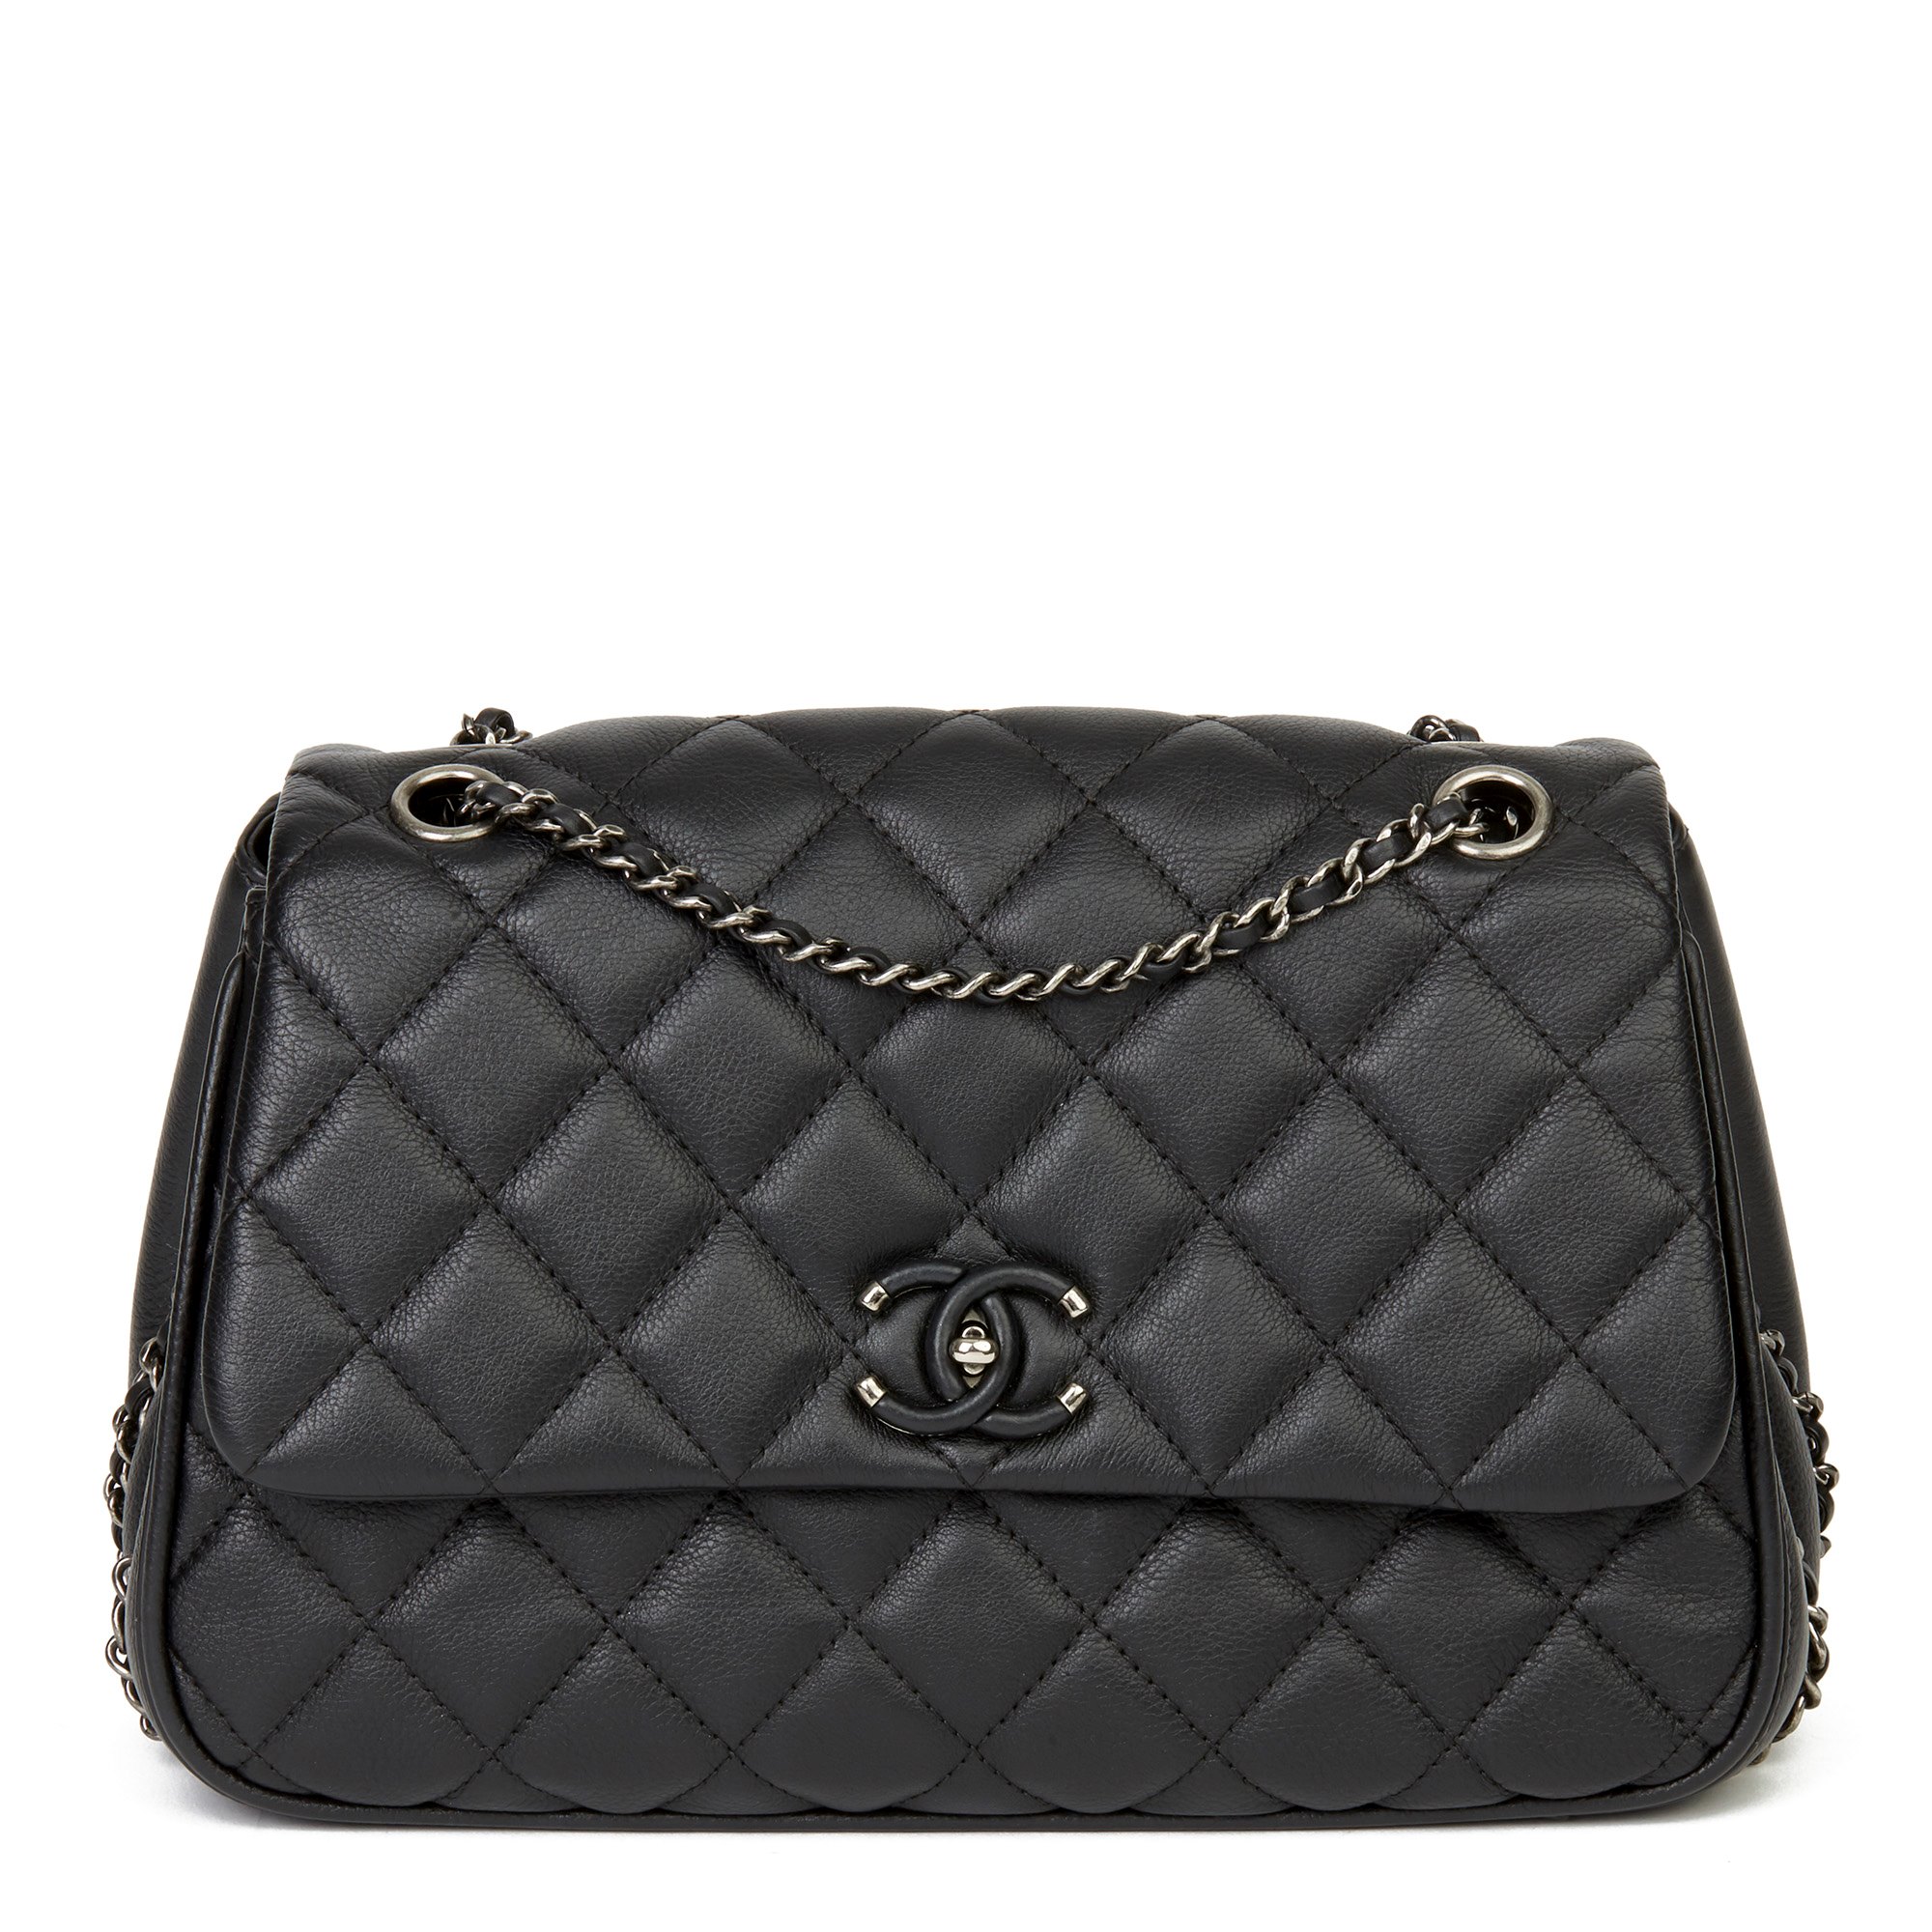 Chanel Single Flap Shoulder Bag Black Quilted Lambskin Leather